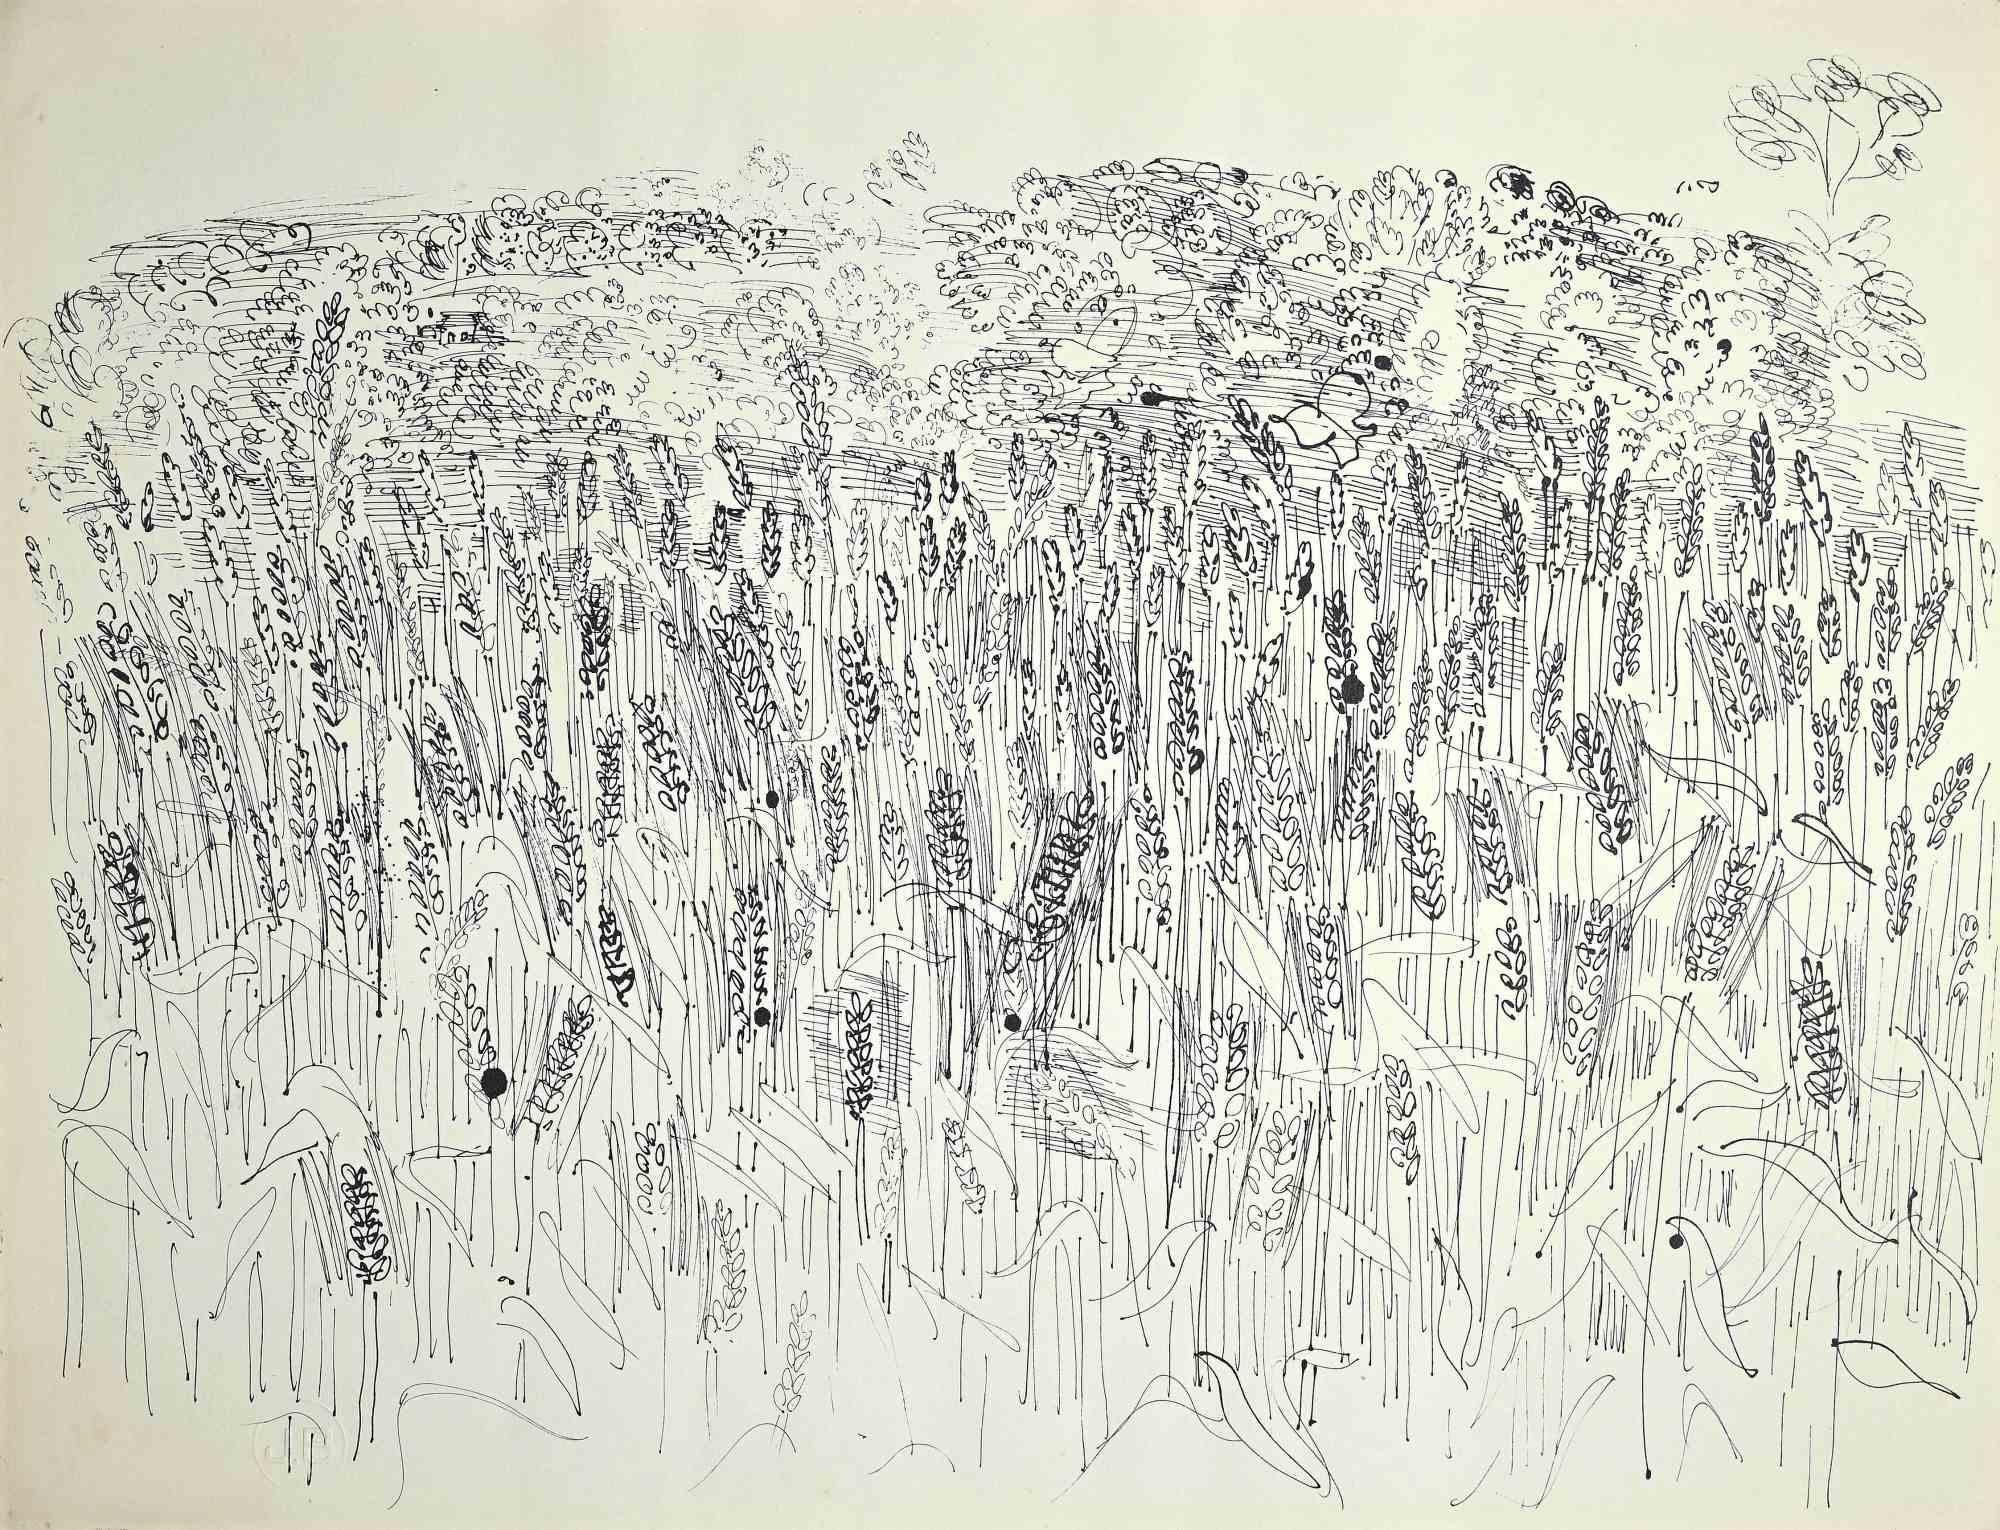 Unknown Landscape Print - Wheat Field - Original Lithograph by Raoul Dufy - 1933